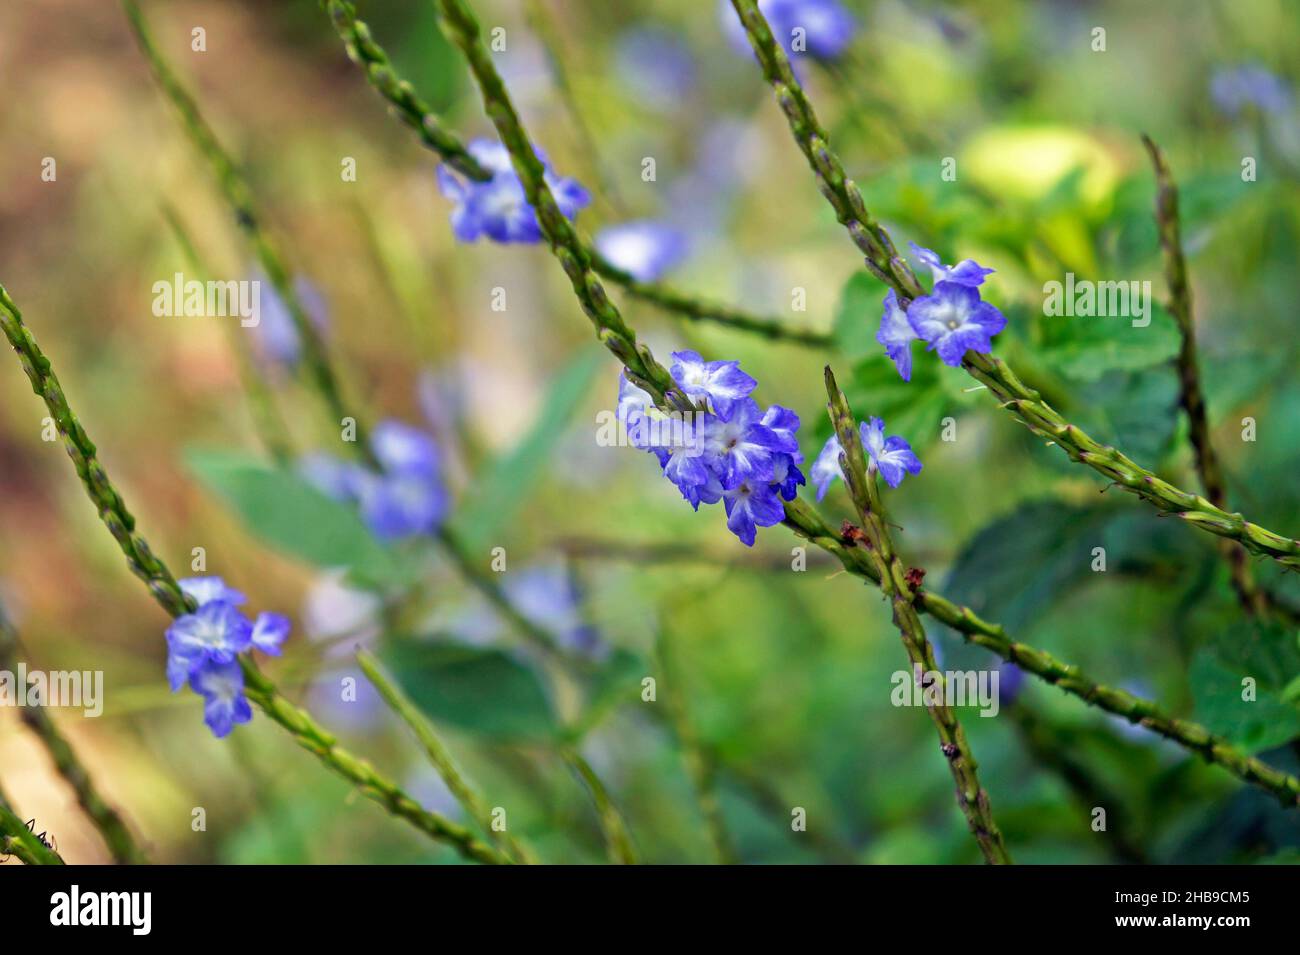 Blue snakeweed flowers (Stachytarpheta cayennensis) Stock Photo